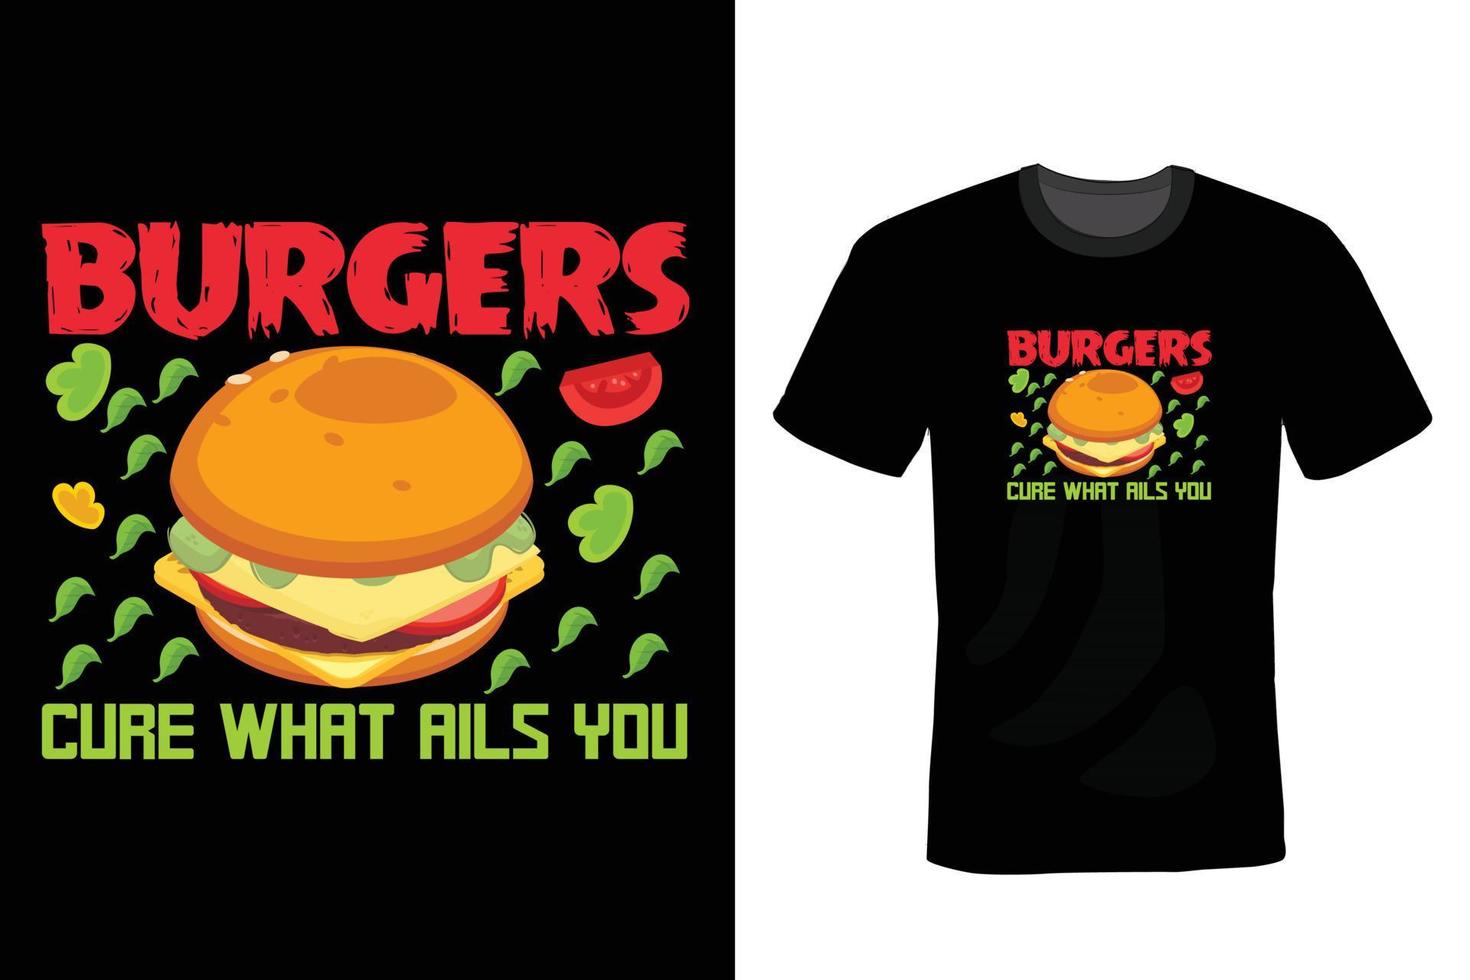 t-shirt hamburger design, vintage, tipografia vettore